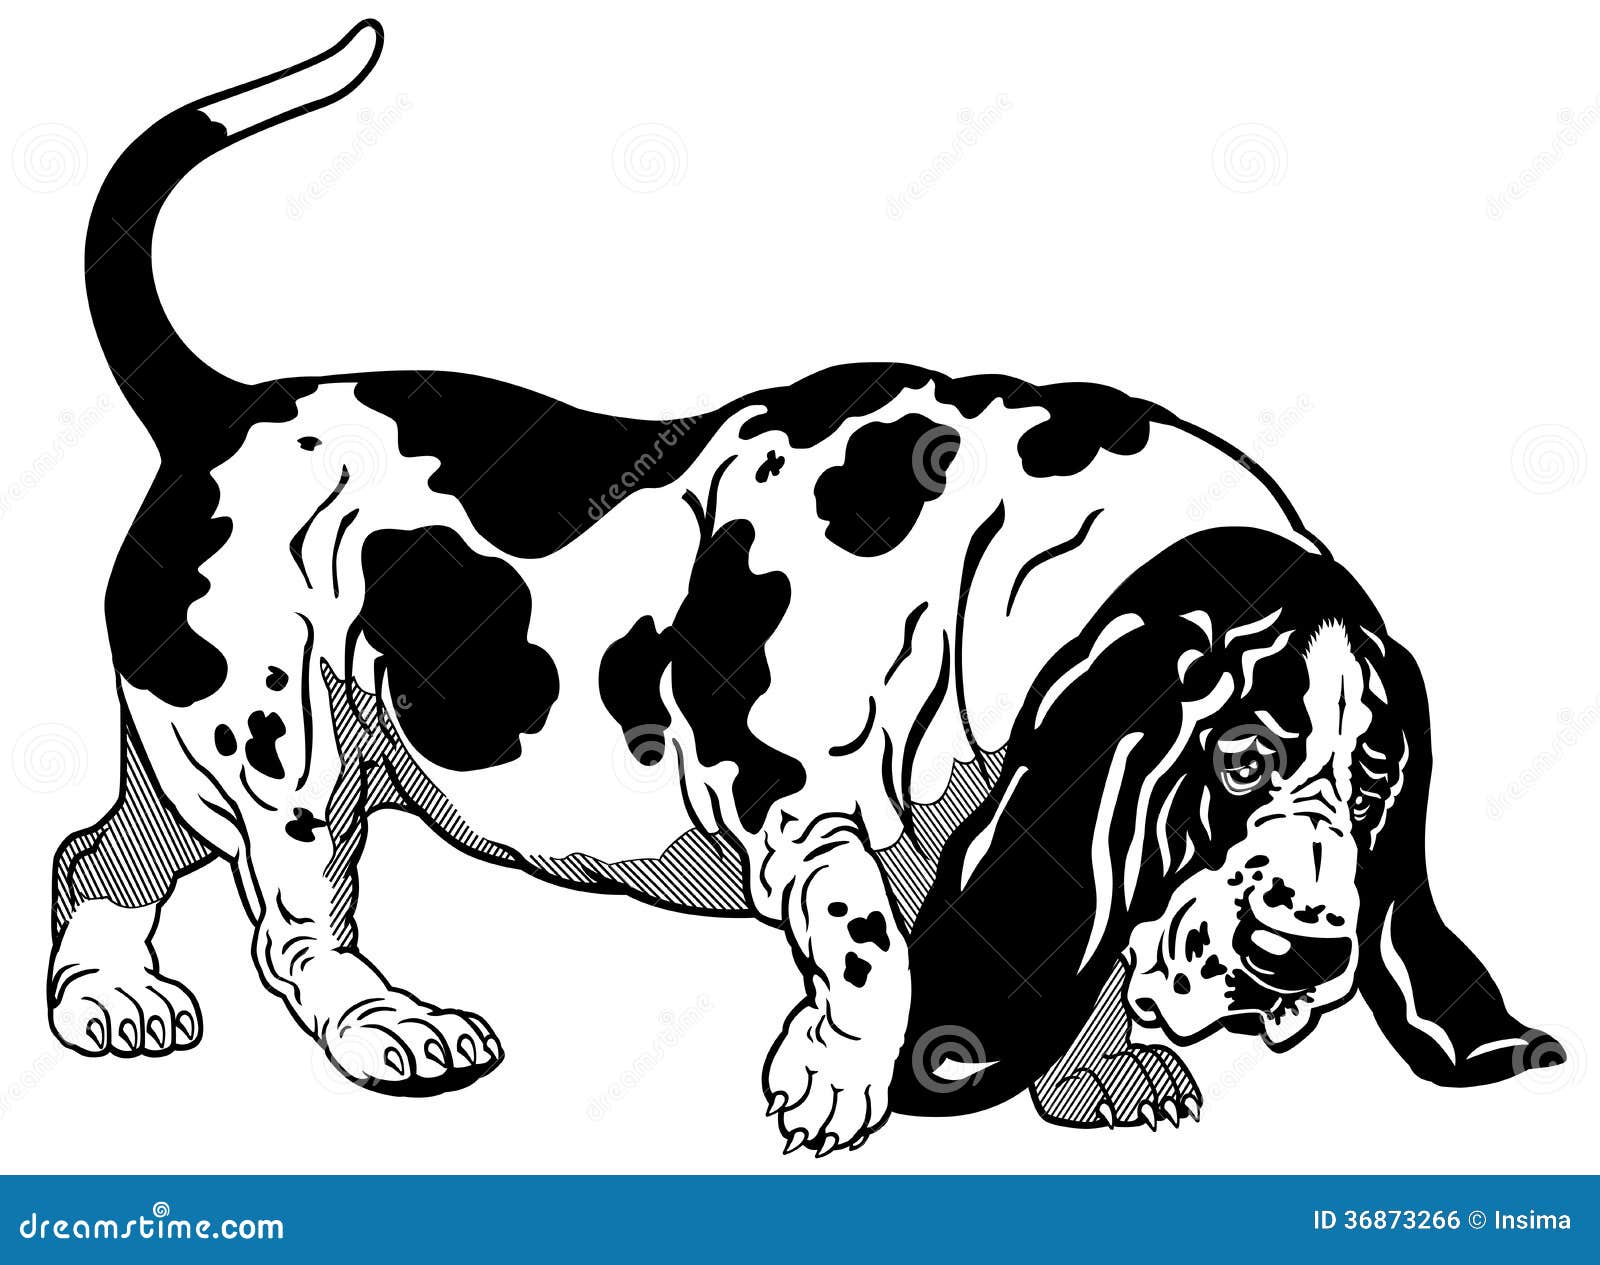 hound dog clipart - photo #42